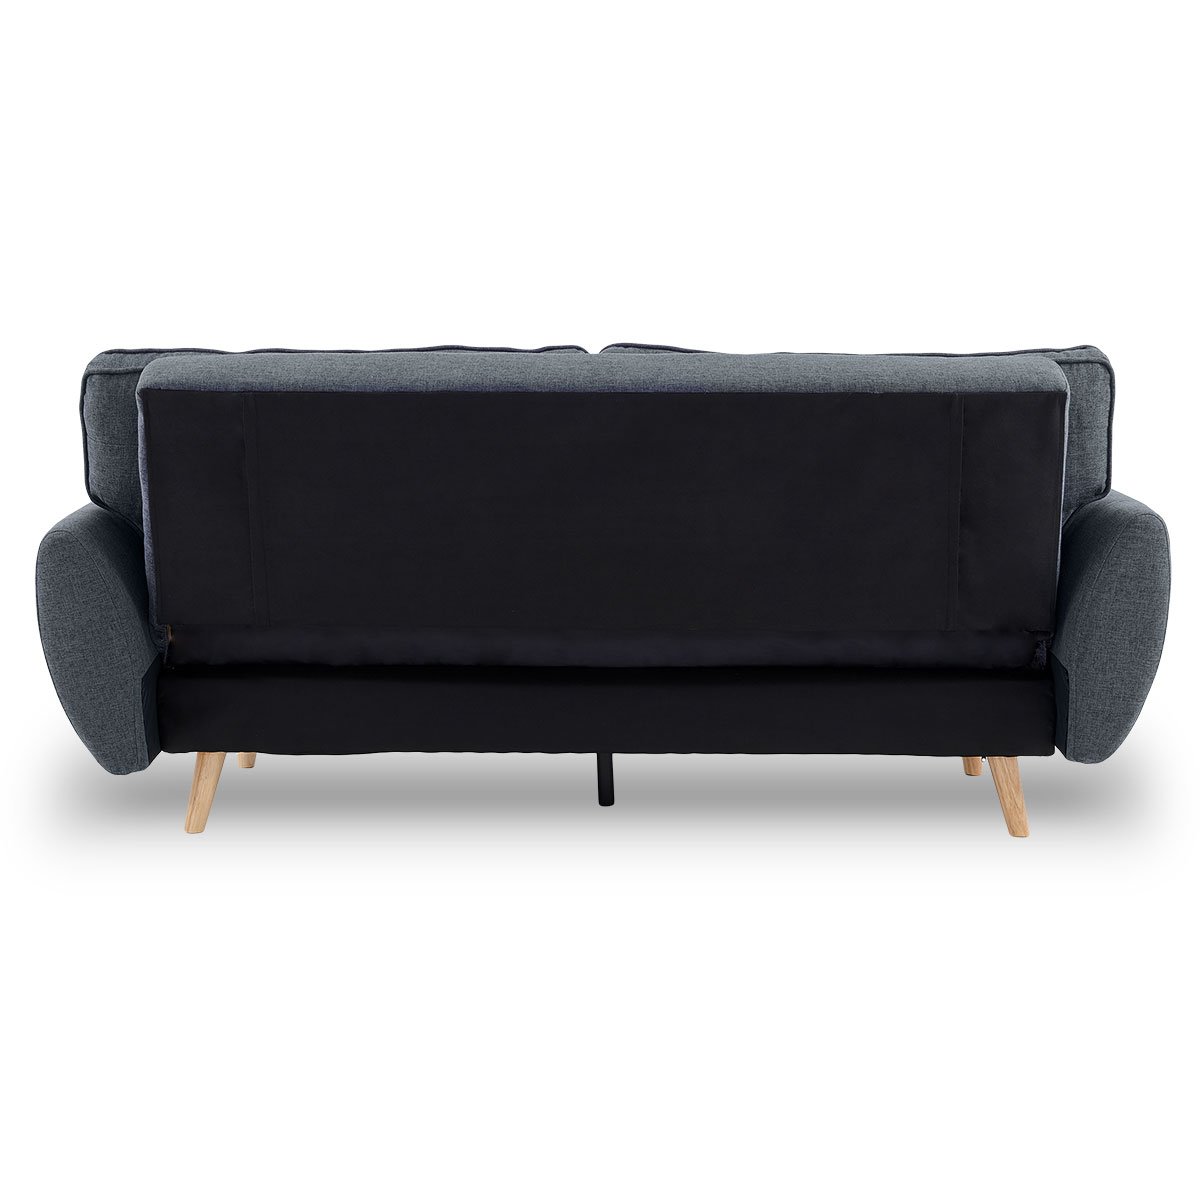 indoor furniture 3 Seater Modular Linen Fabric Wood Sofa Bed Couch- Dark Grey